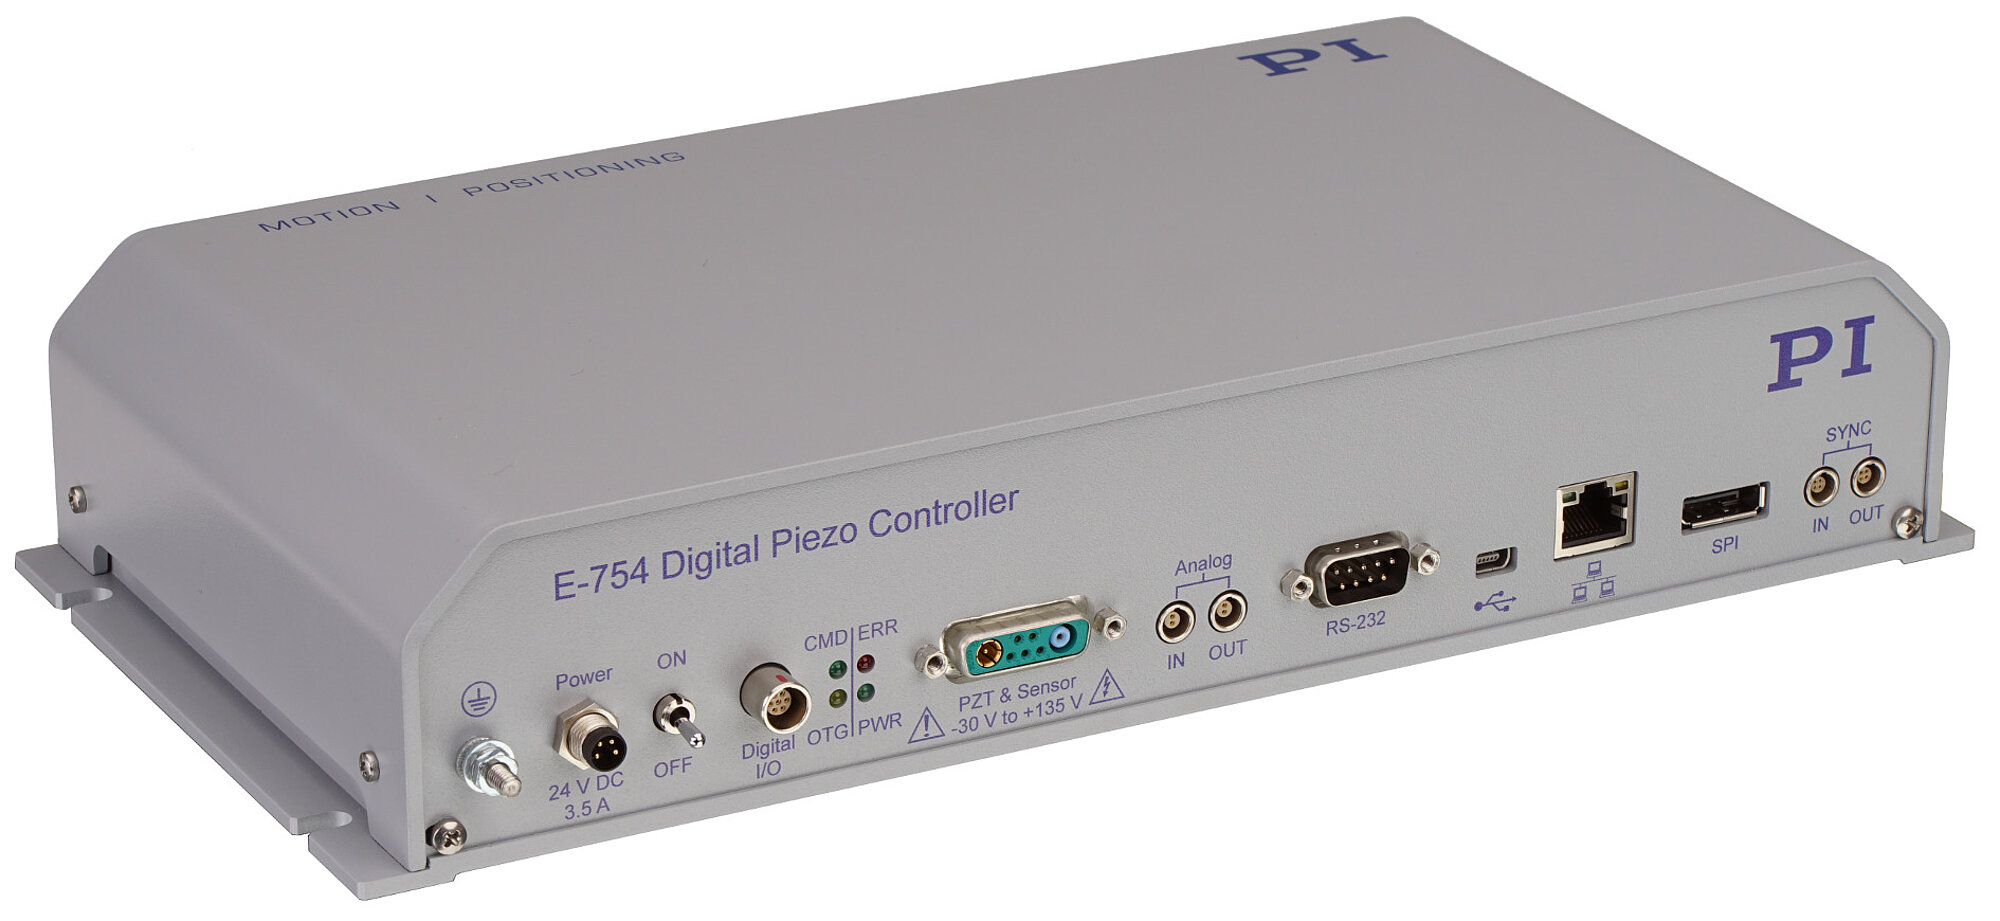 E-754 Digitaler Piezocontroller